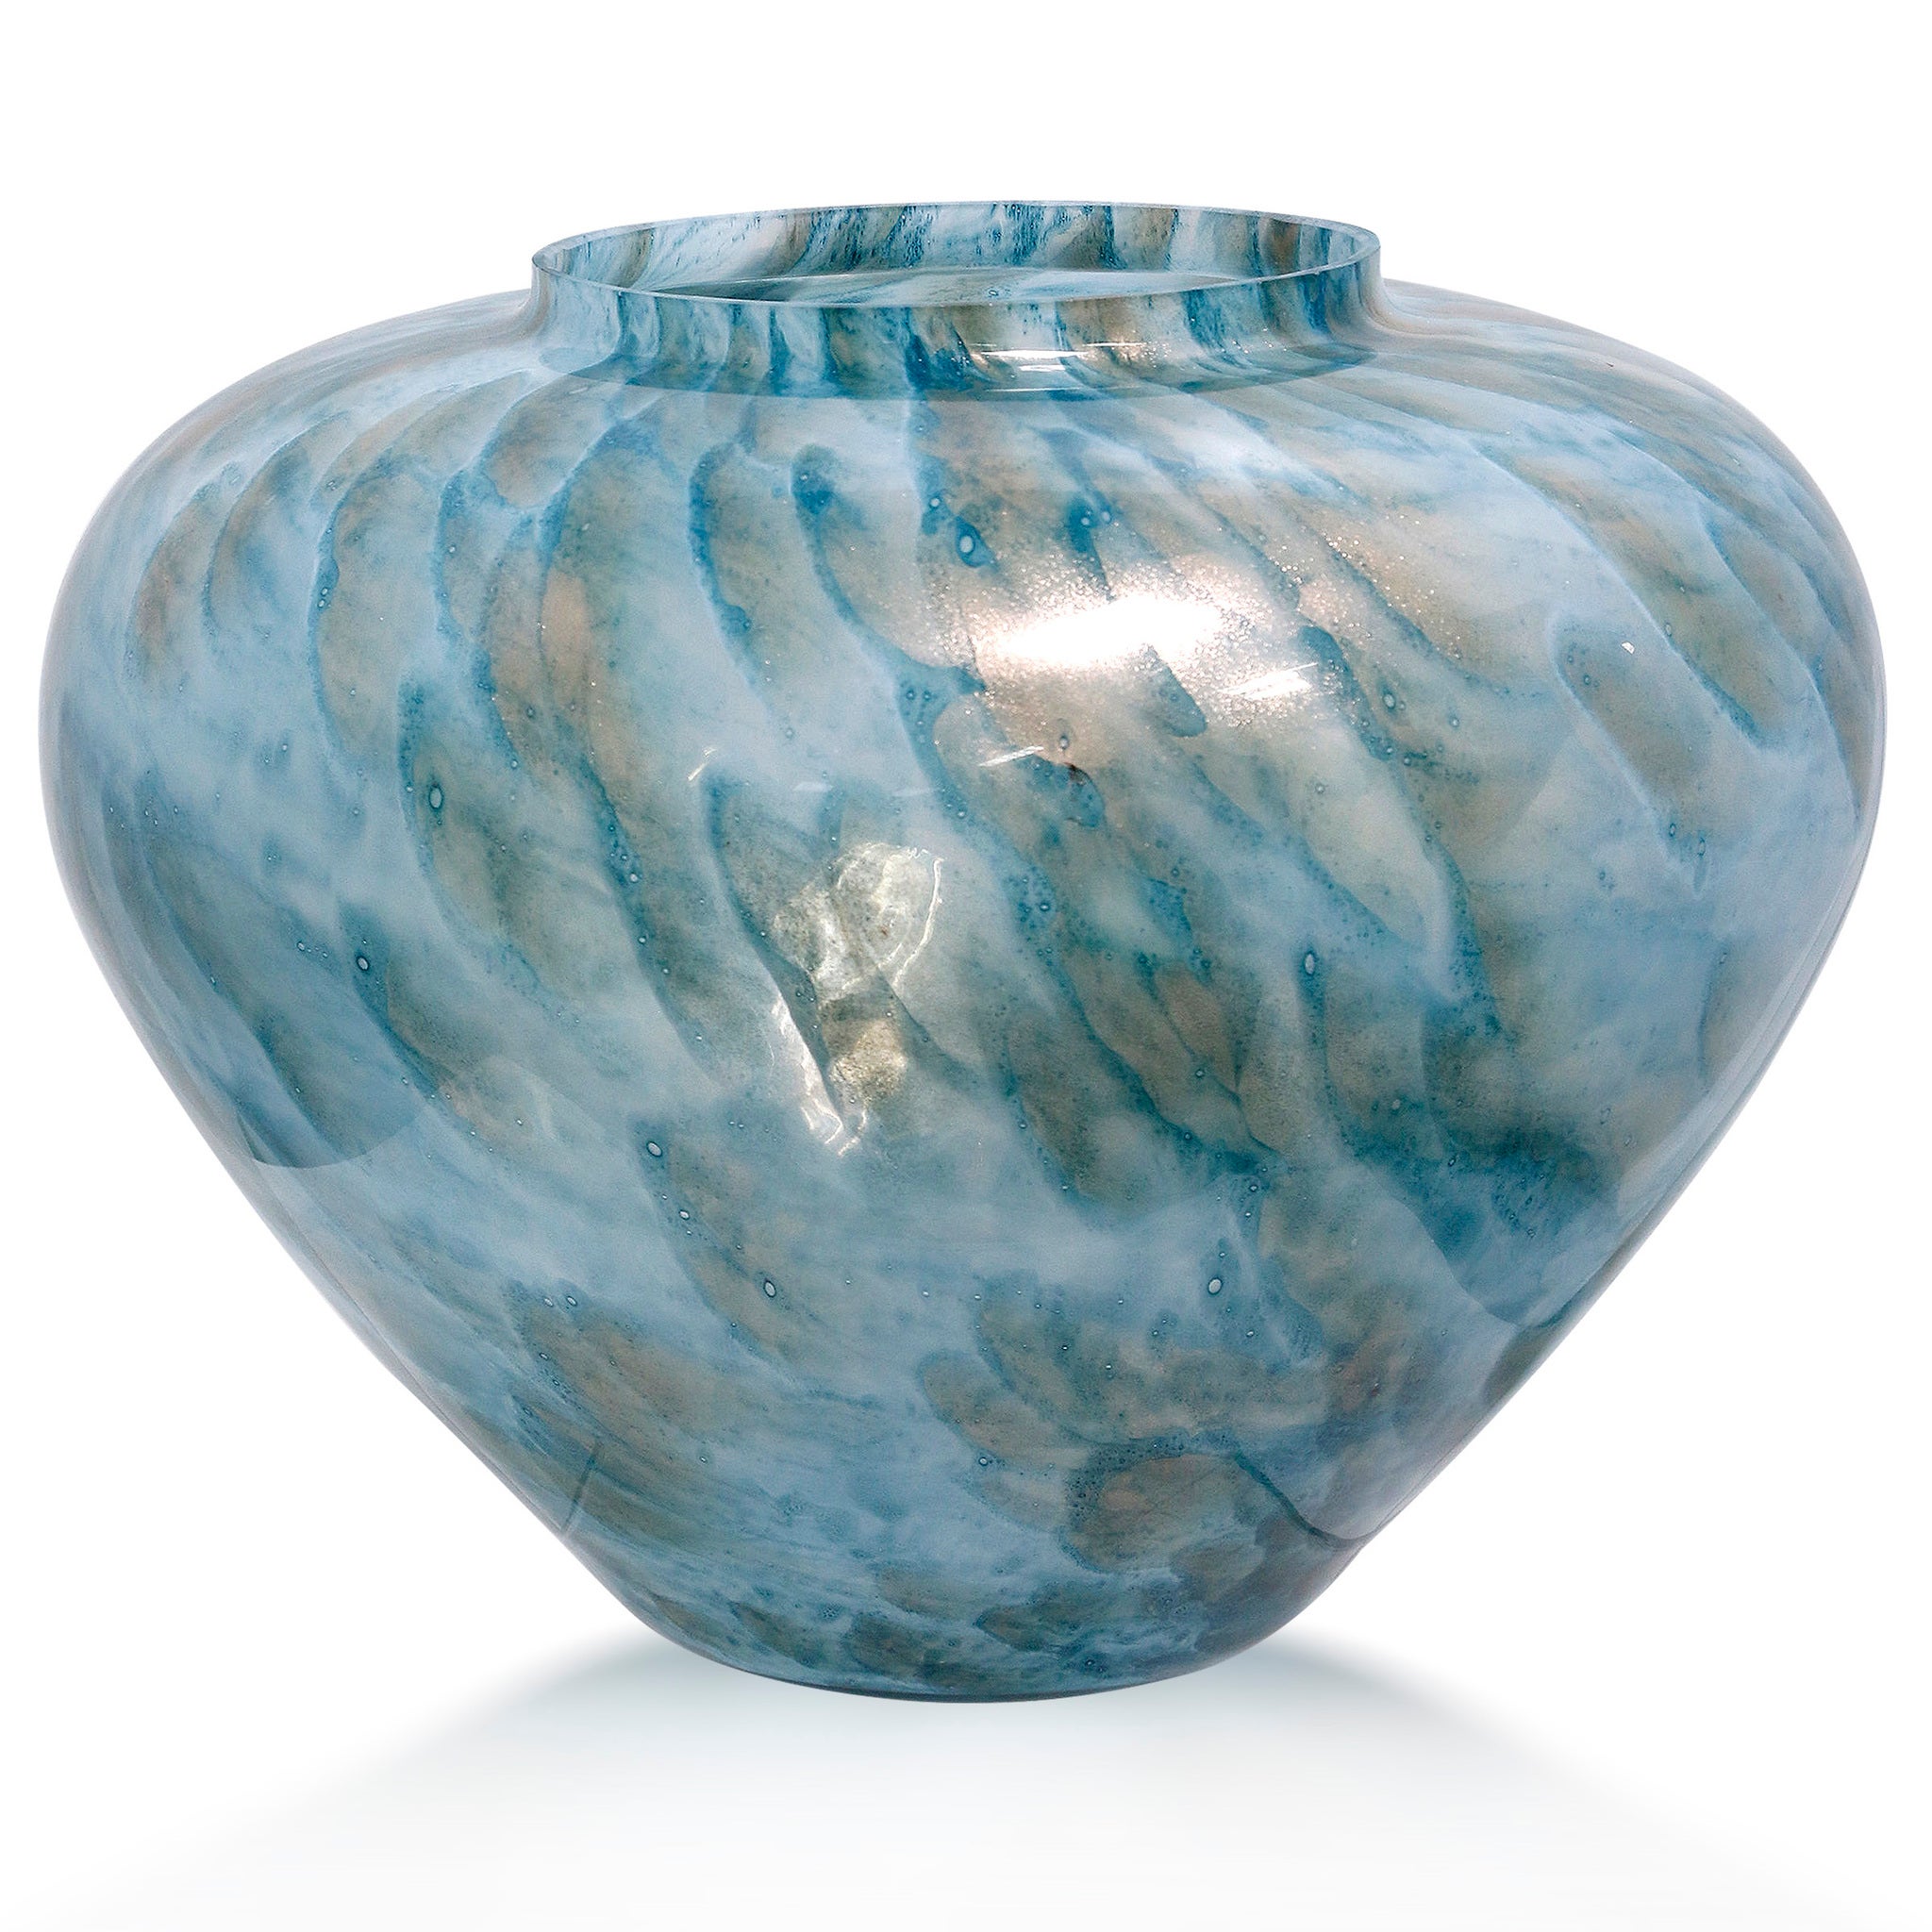 Duke Bowl Accessories Vases Urns Bowls Ceramic Multi Colored Handcraft 